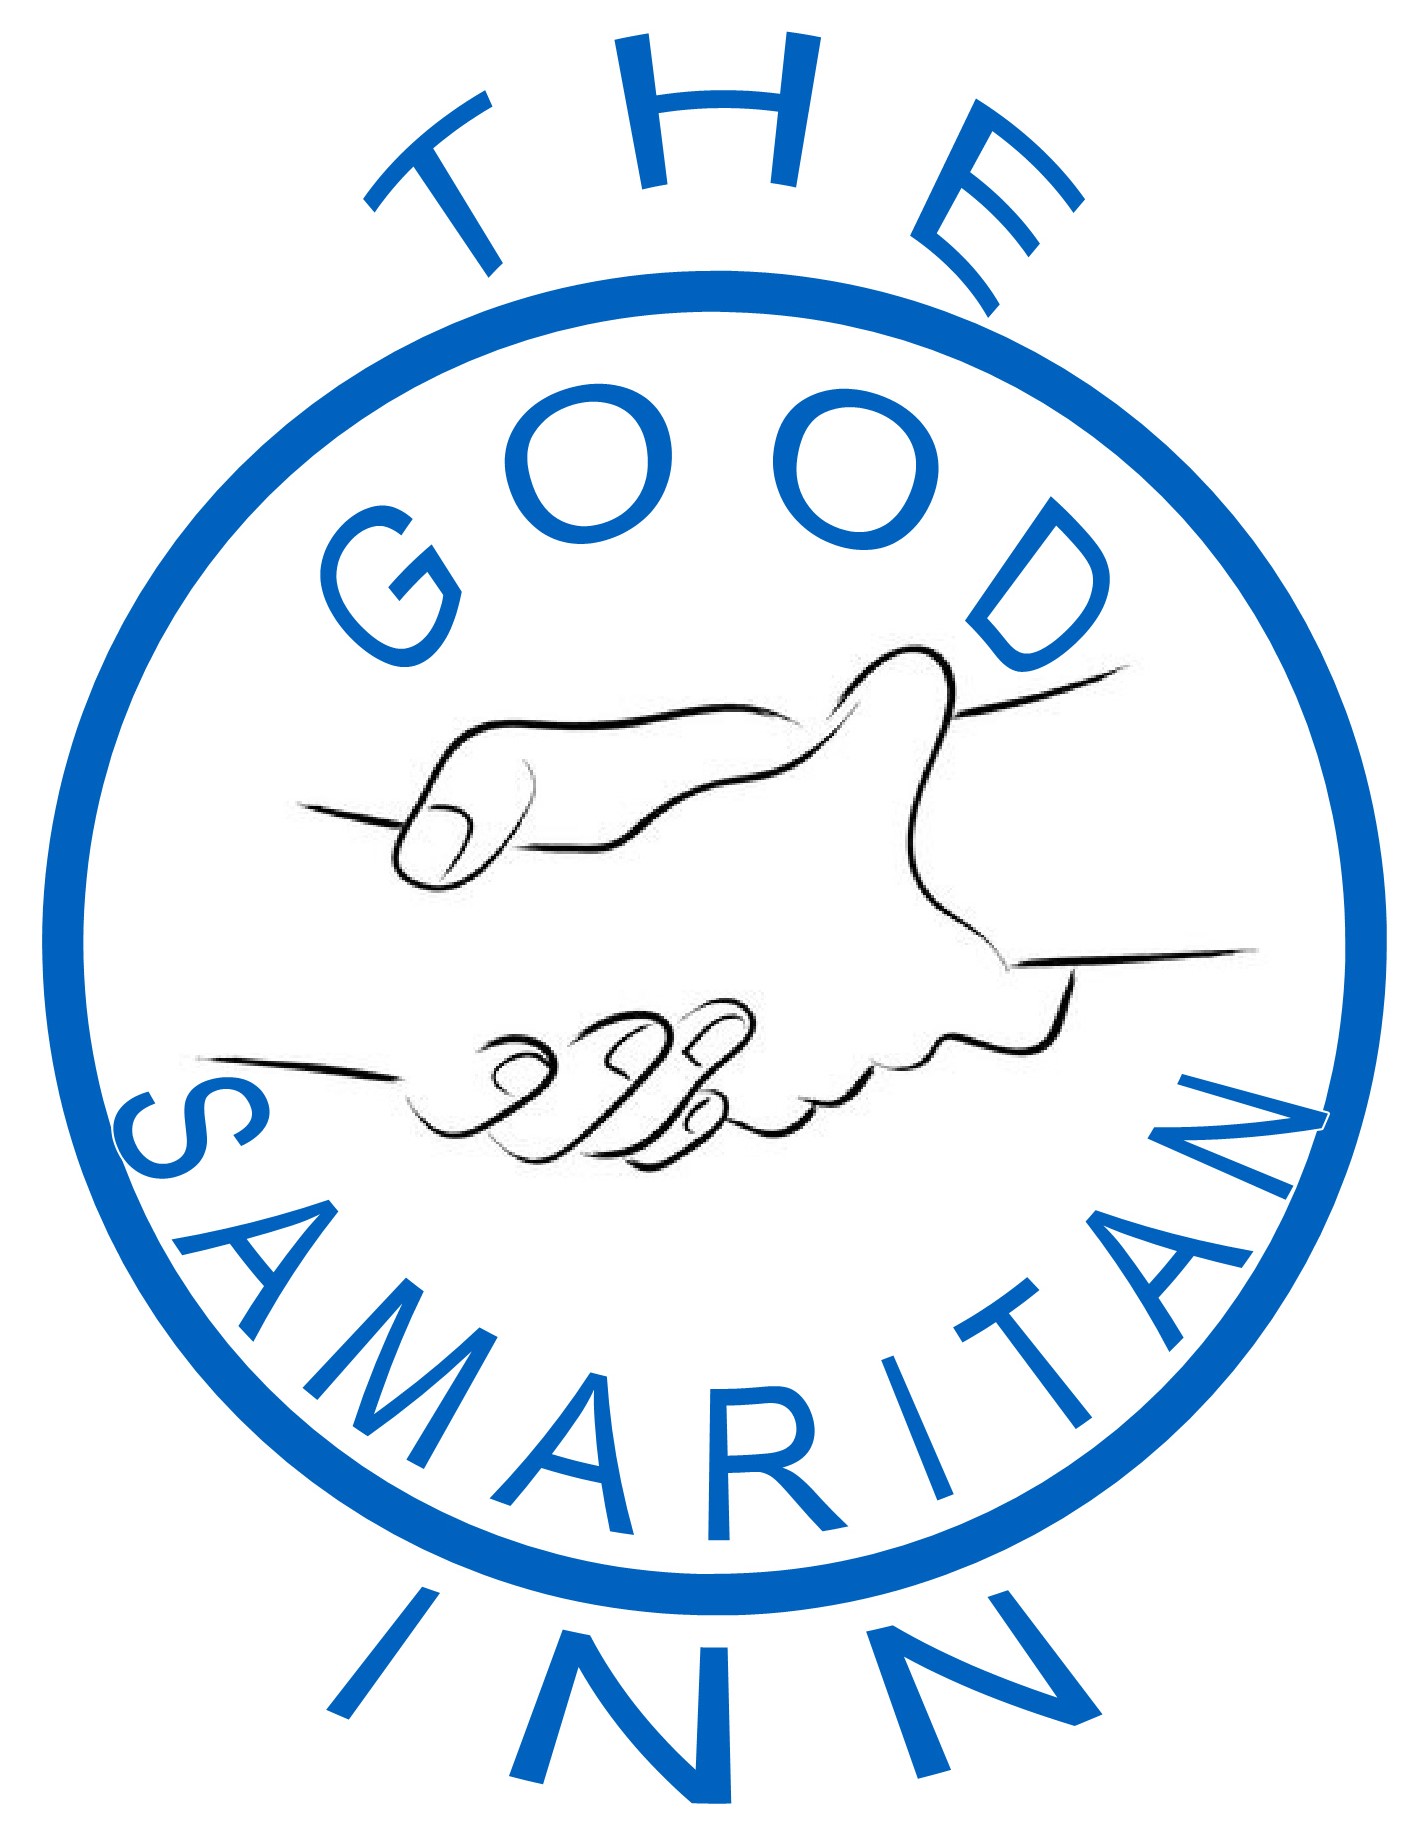 The Good Samairtan Inn logo